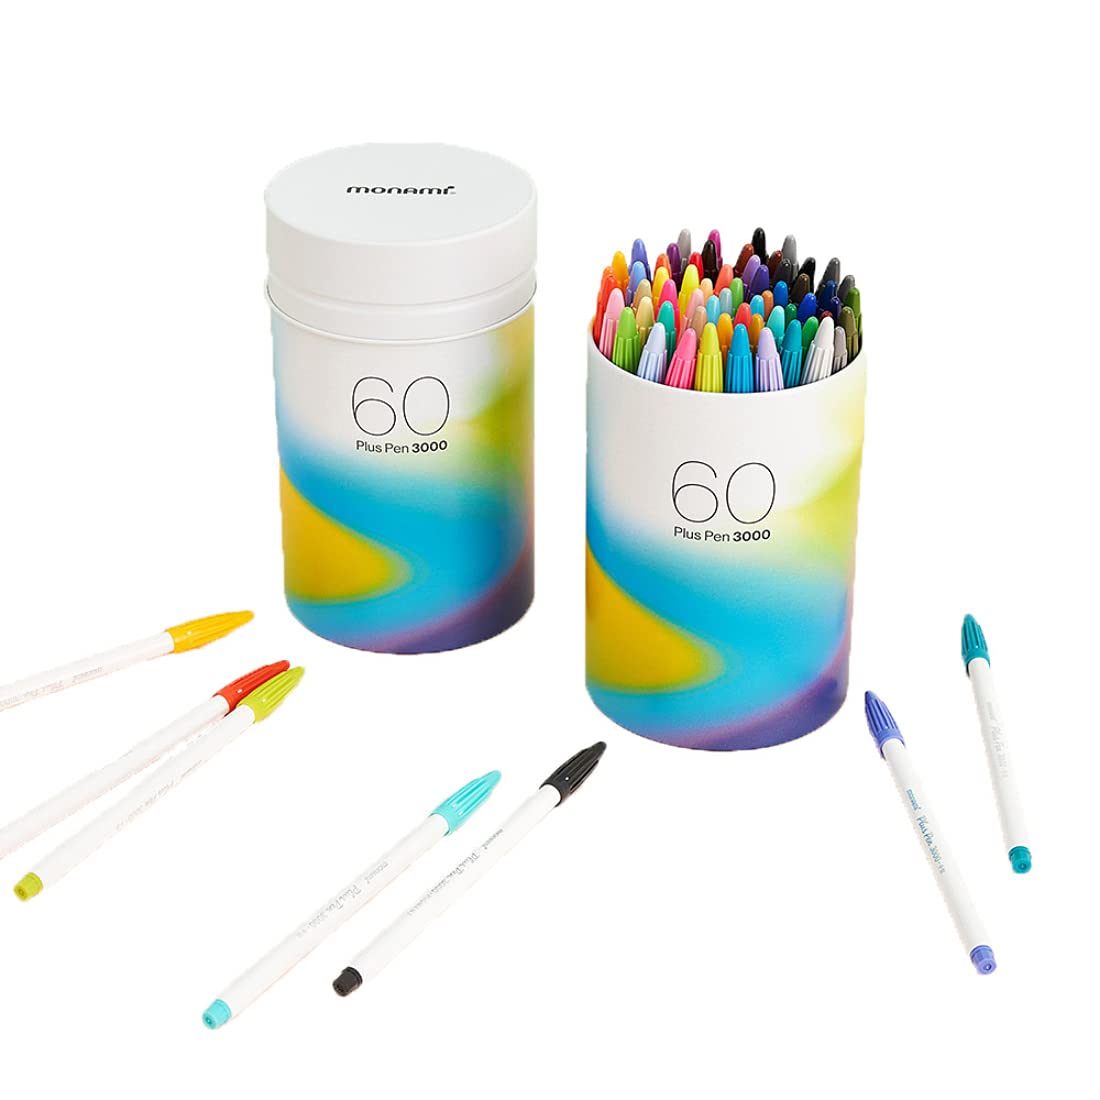 108 Colors Fineliner Color Pen Set Colorful Ultra Fine 0.4mm Felt